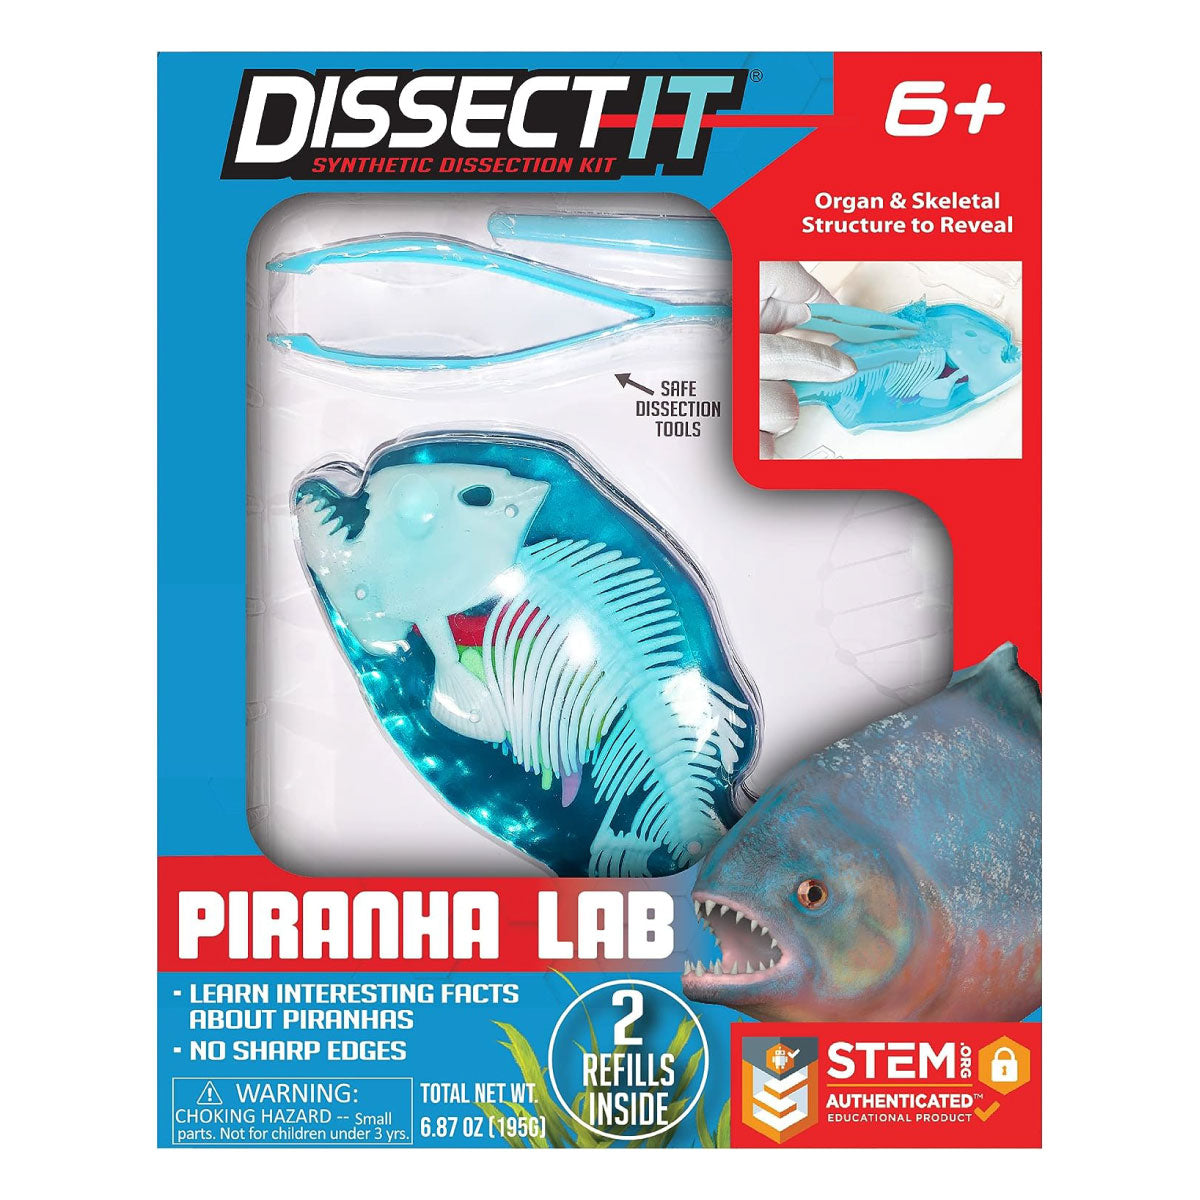 Dissect-It Piranha STEM Kit from Top Secret Toys